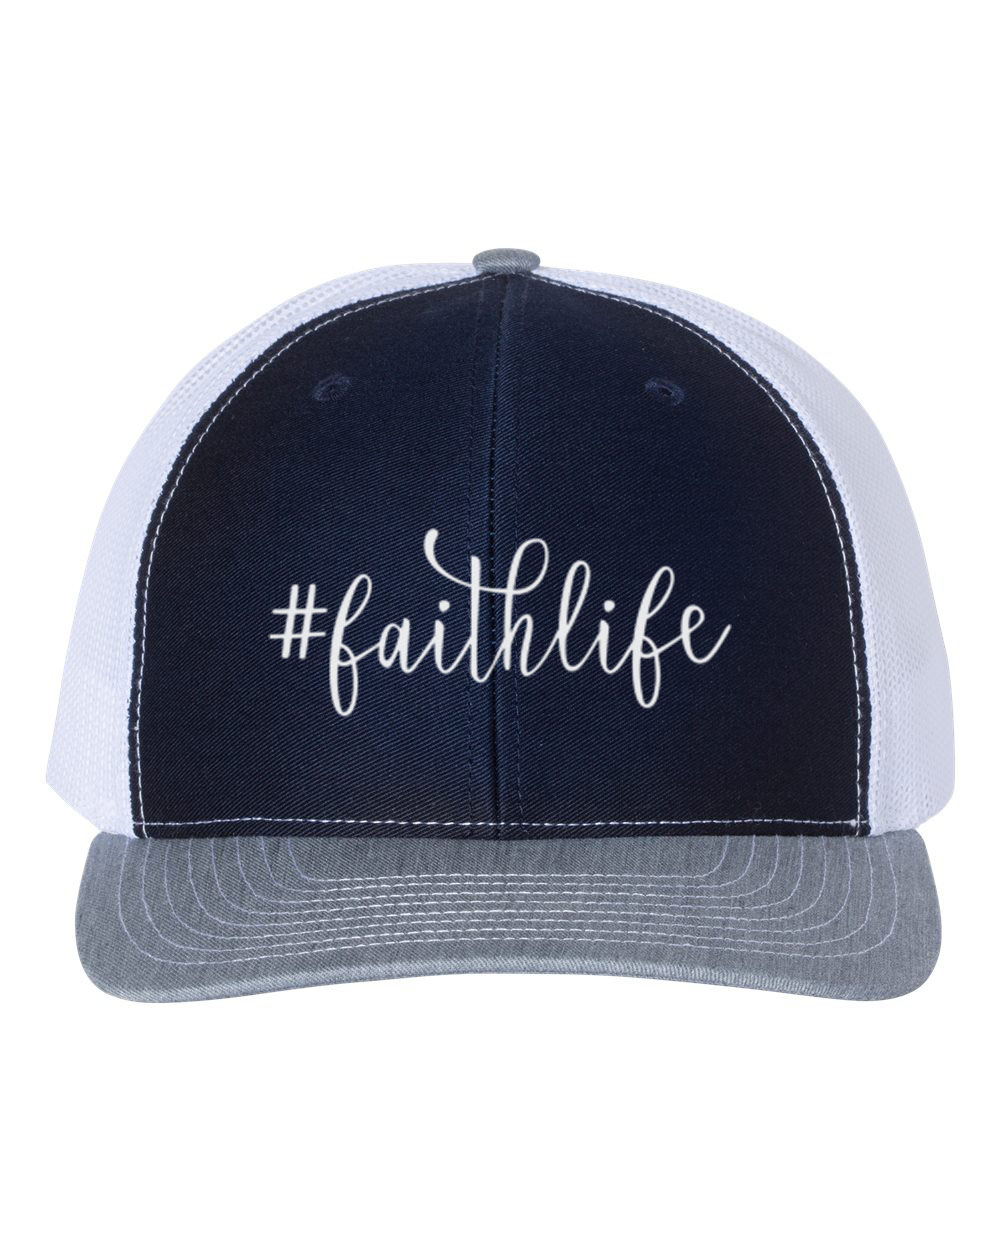 Christian Hat, #Faithlife, Christian Snapback, Faith Hat, Adjustable, Jesus Apparel, Ministry, Church Hat, Trucker Hat, Faith, White Text, Navy/White/Heather - image 1 of 1